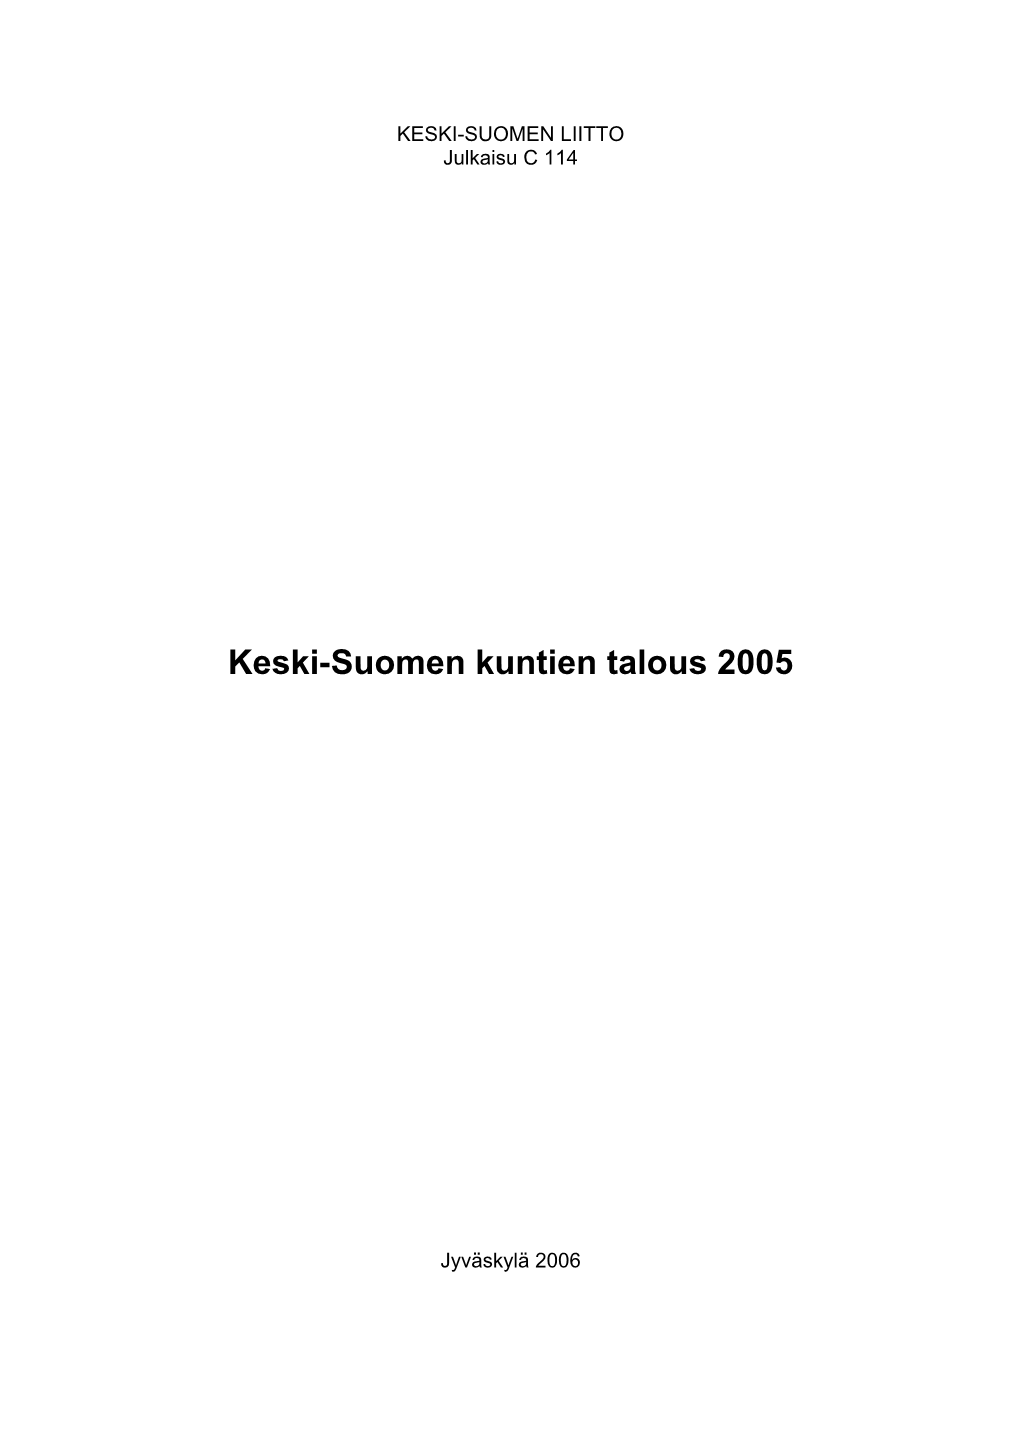 Keski-Suomen Kuntien Talous 2005